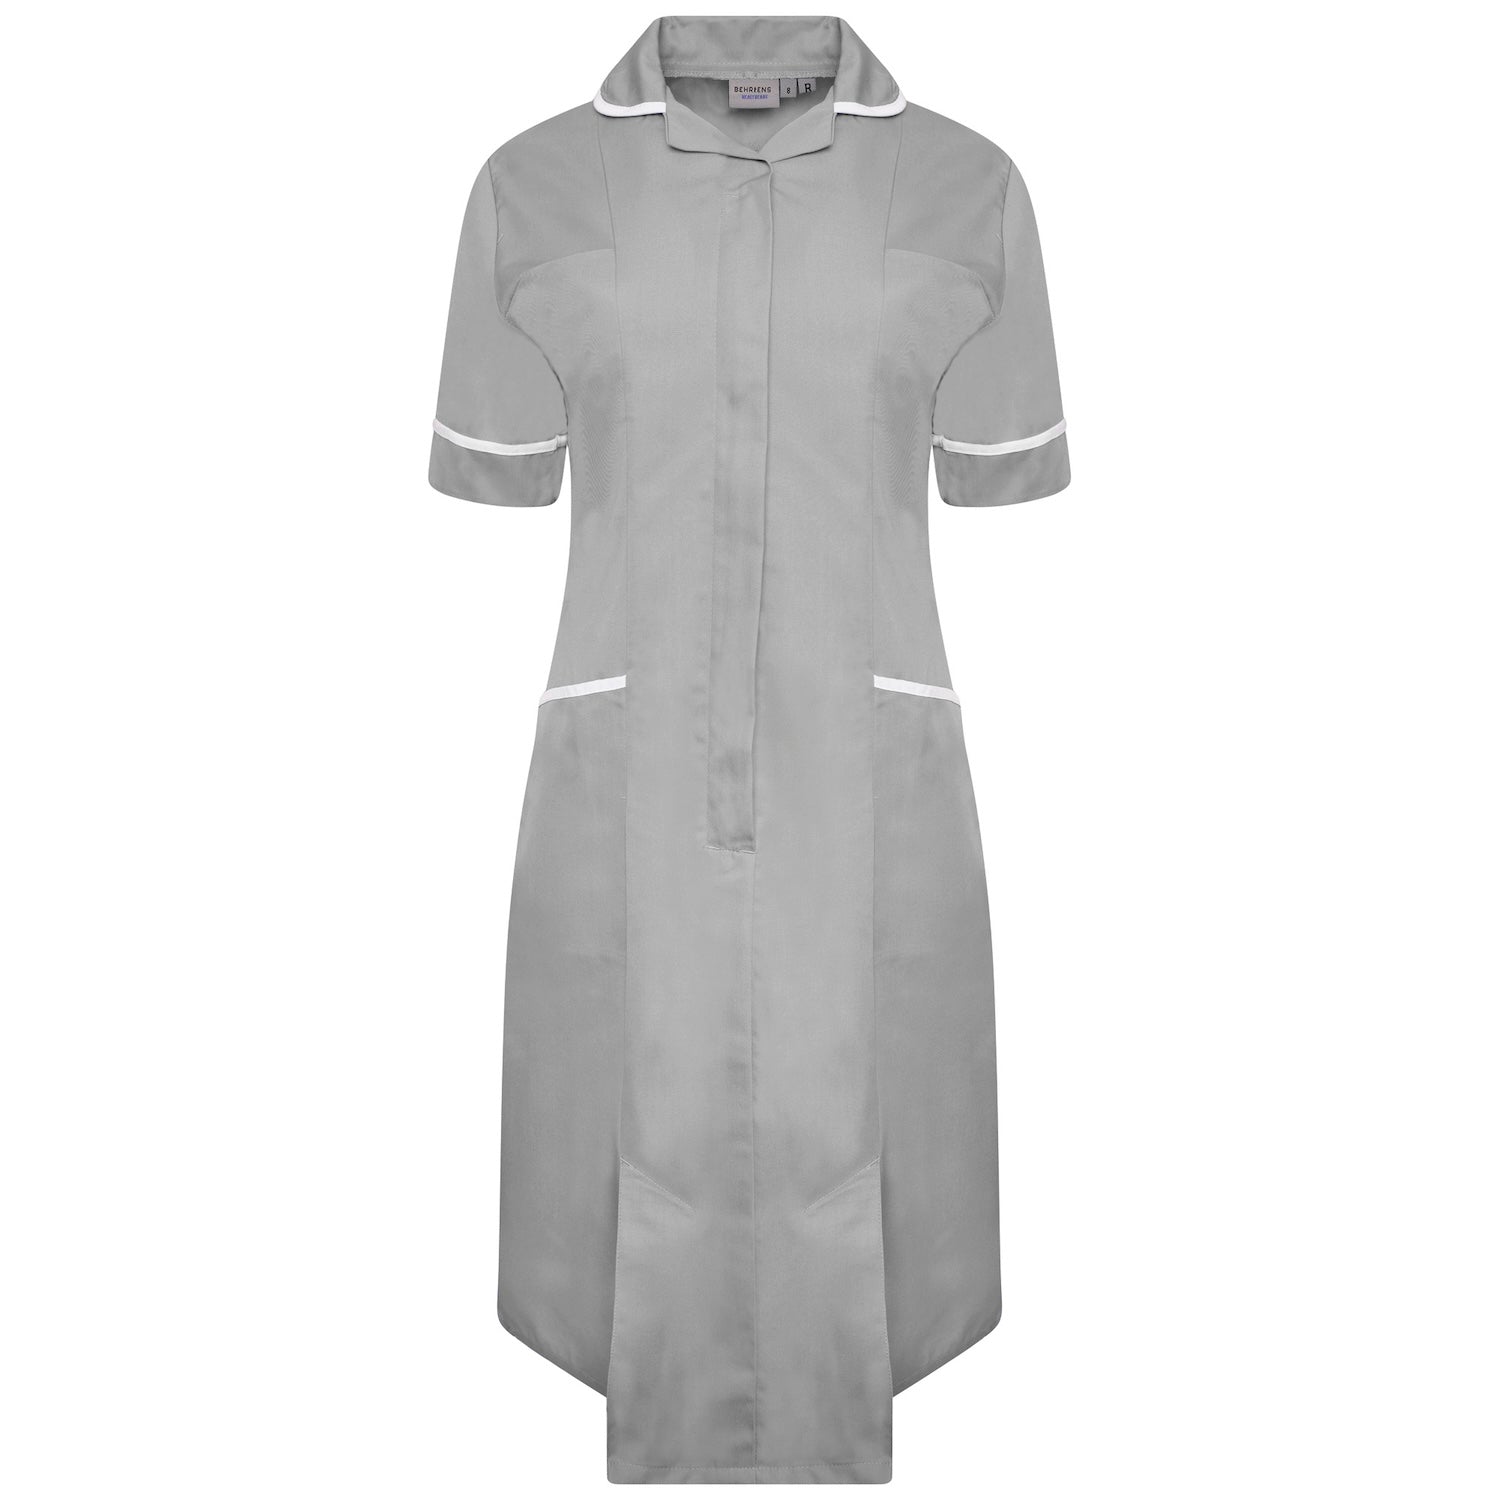 Ladies Healthcare Dress | Round Collar | Grey/White Trim